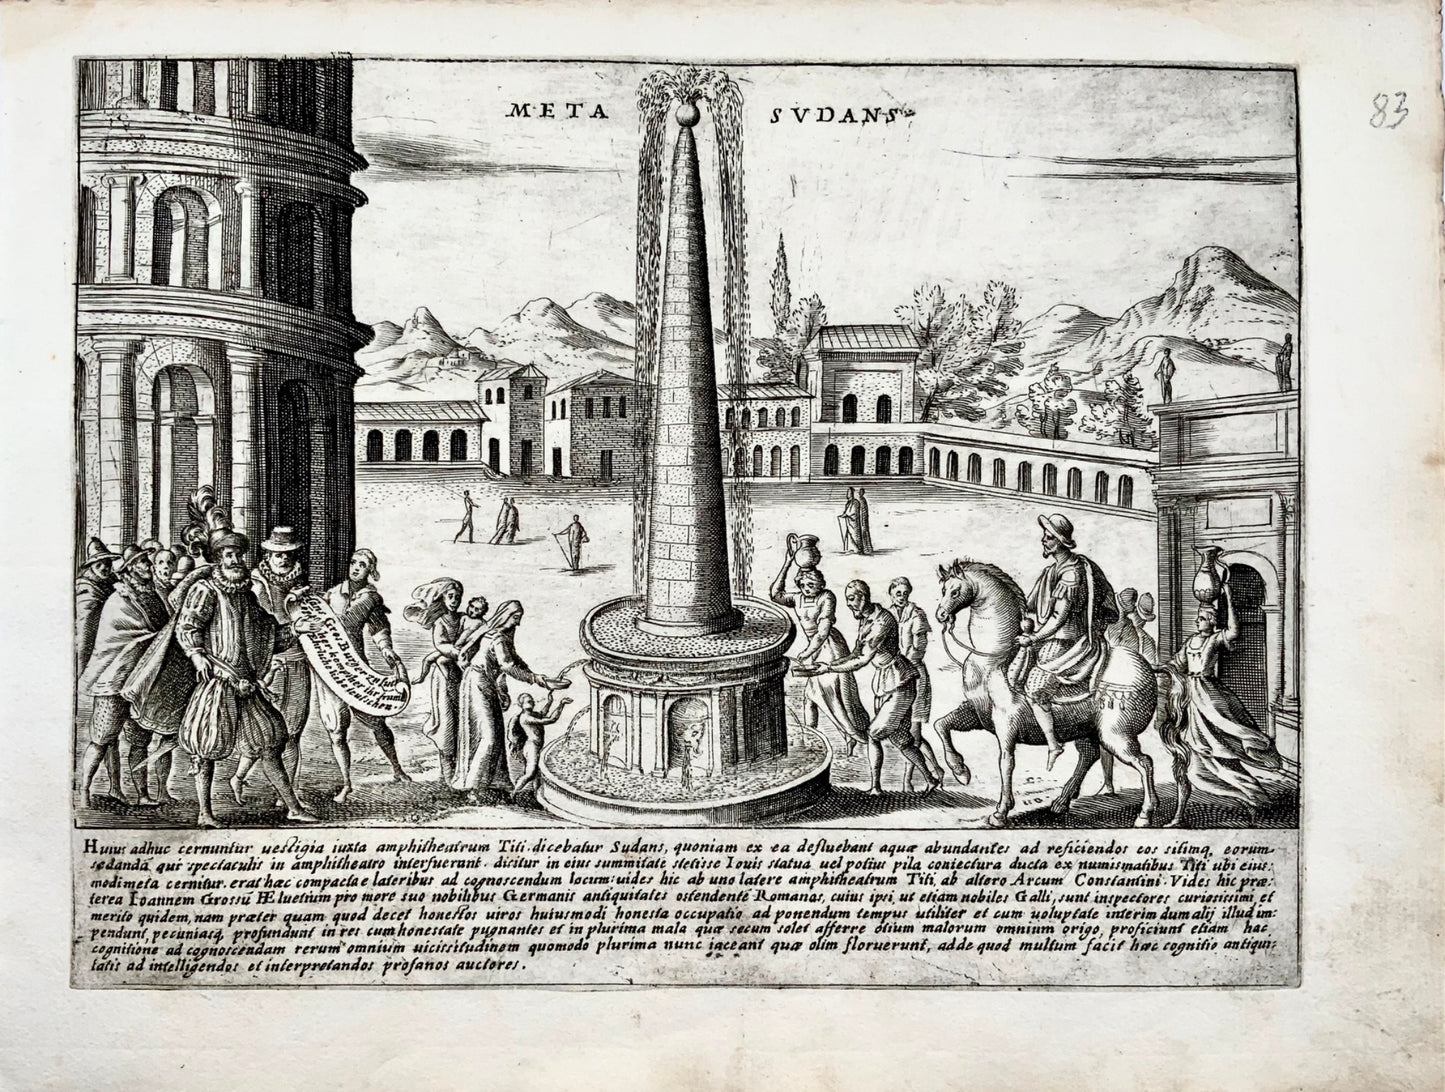 1624 Lauro, Meta Sudans, near Colosseum, Rome Italy, Copper engraving